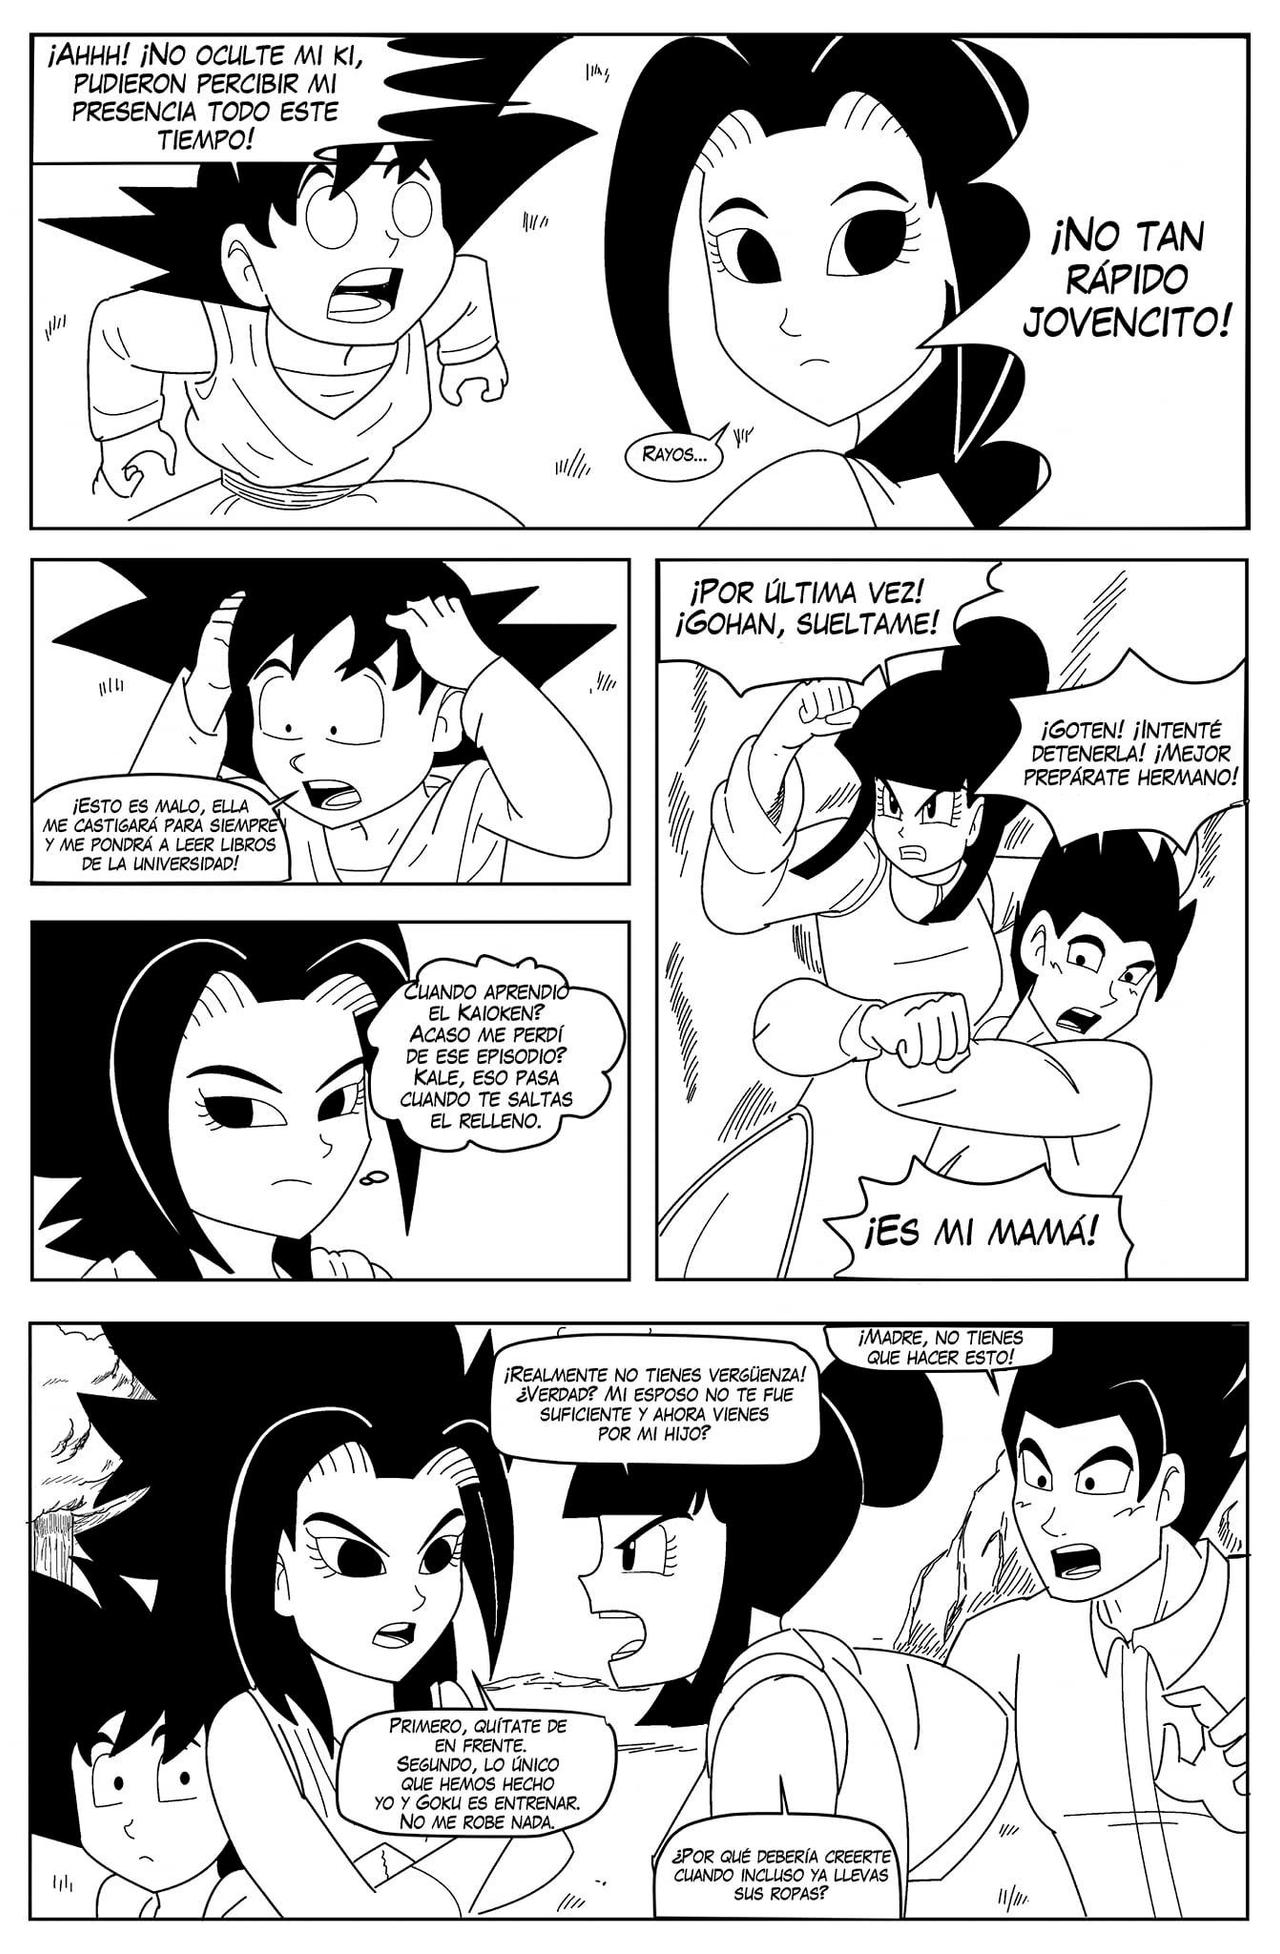 DragonBall:GTH(A Goku X Caulifla Story)ESPANOLP218 by chumpchangedraws on  DeviantArt